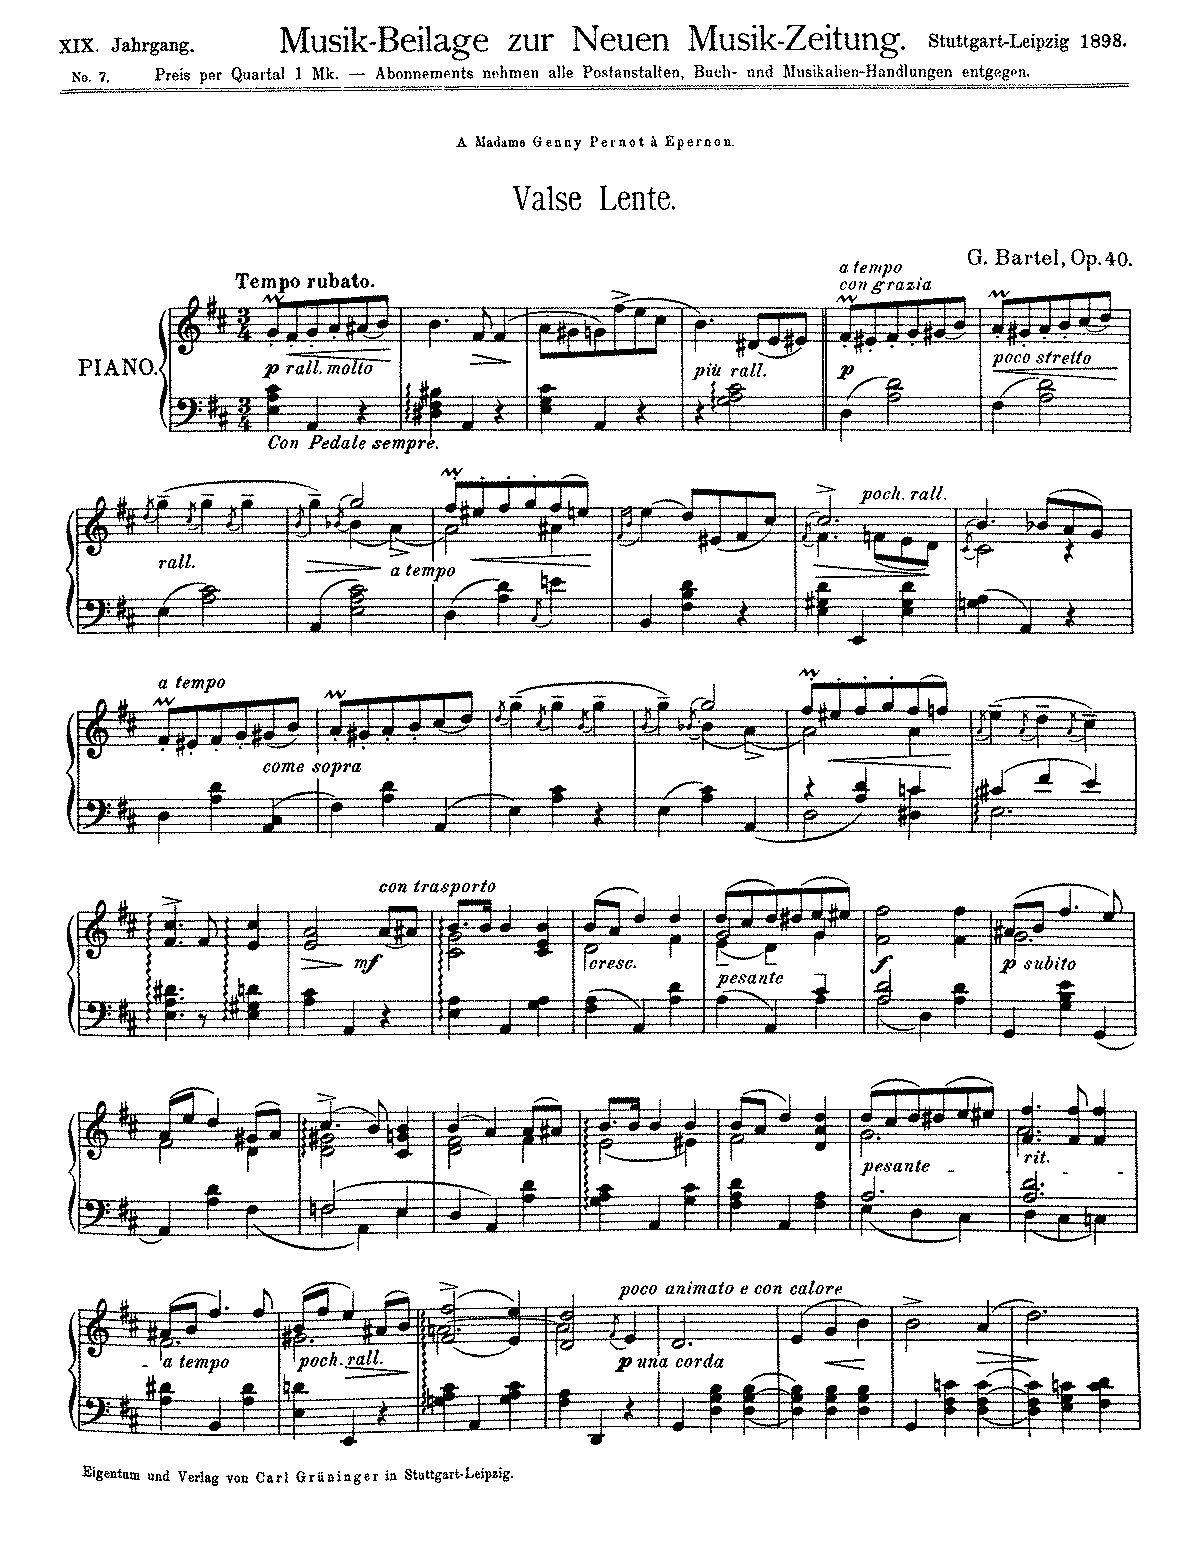 Valse lente, Op.40 (Bartel, Günther) - IMSLP: Free Sheet Music PDF Download